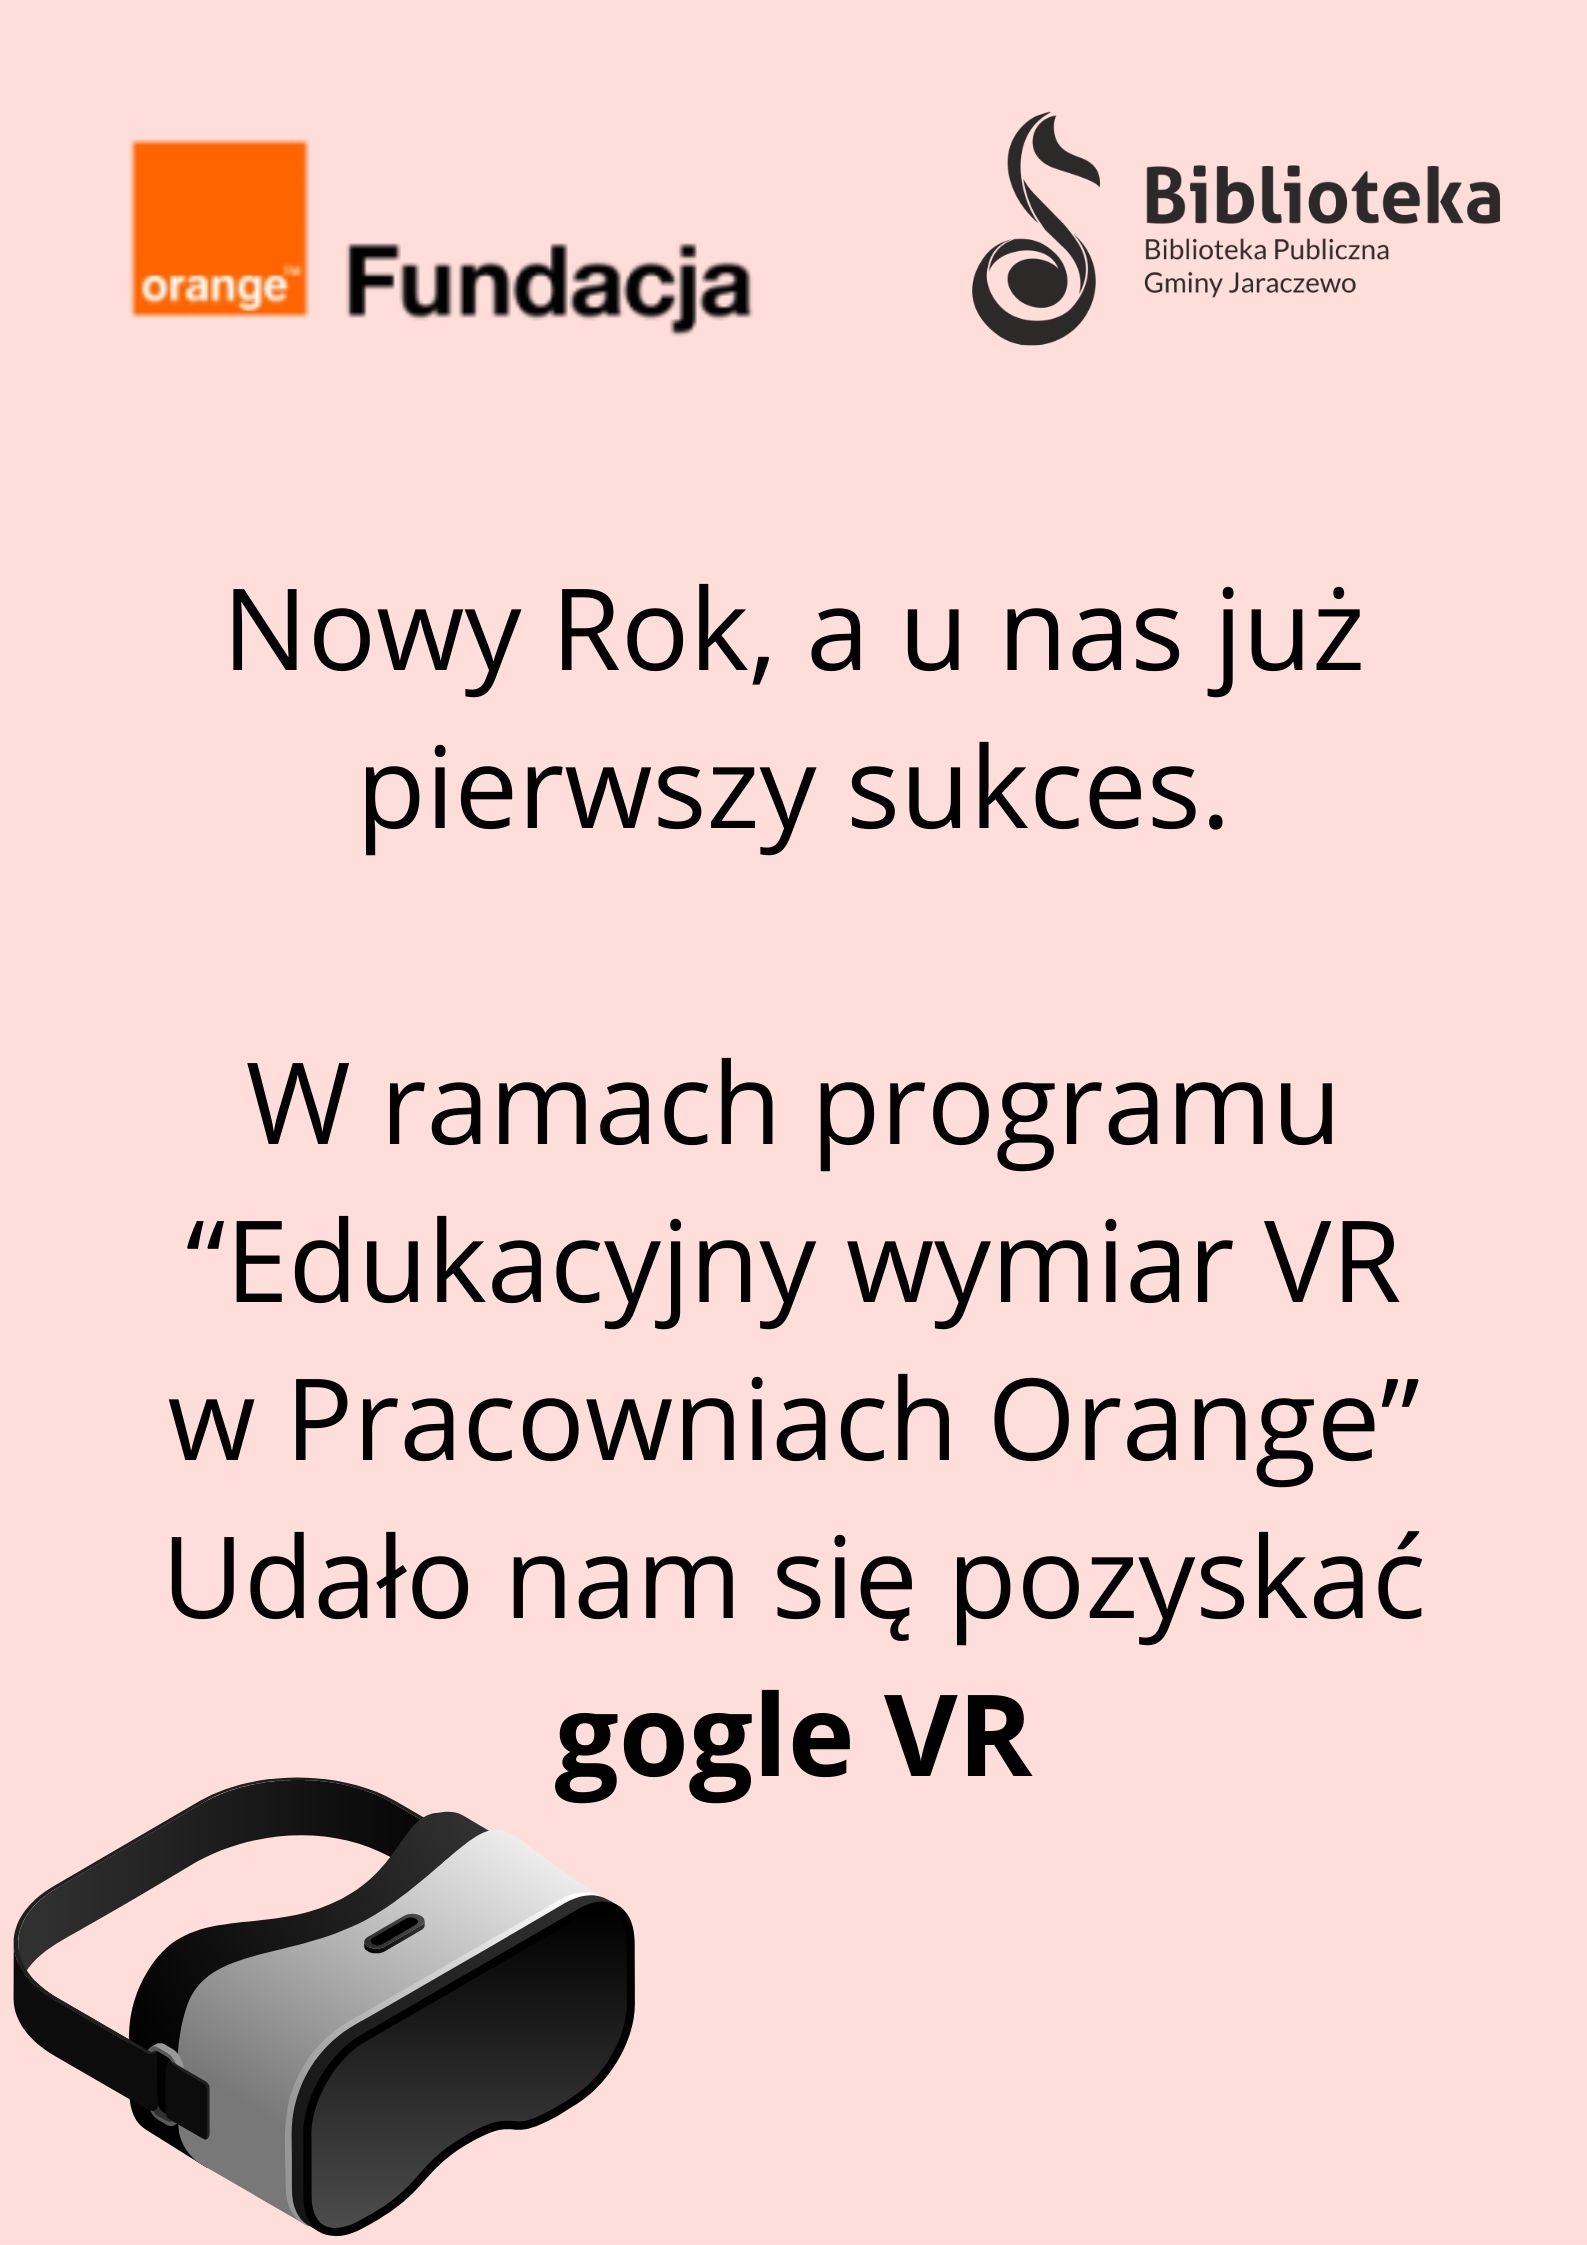 gogle VR